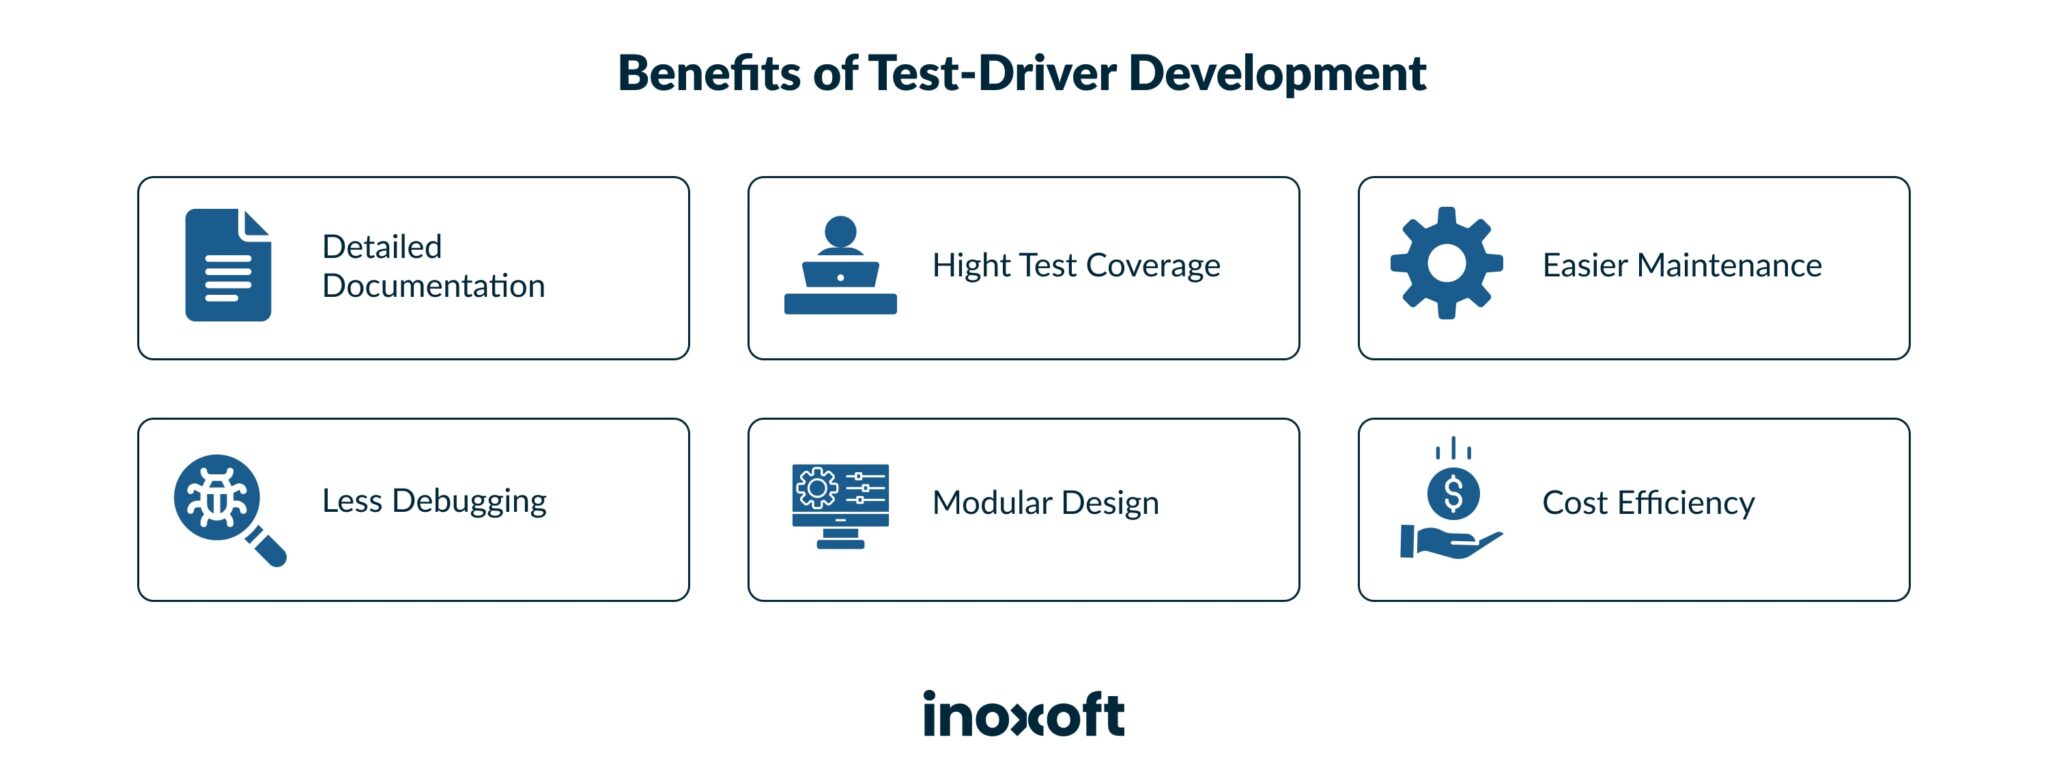 Benefits of Test-Driven Development